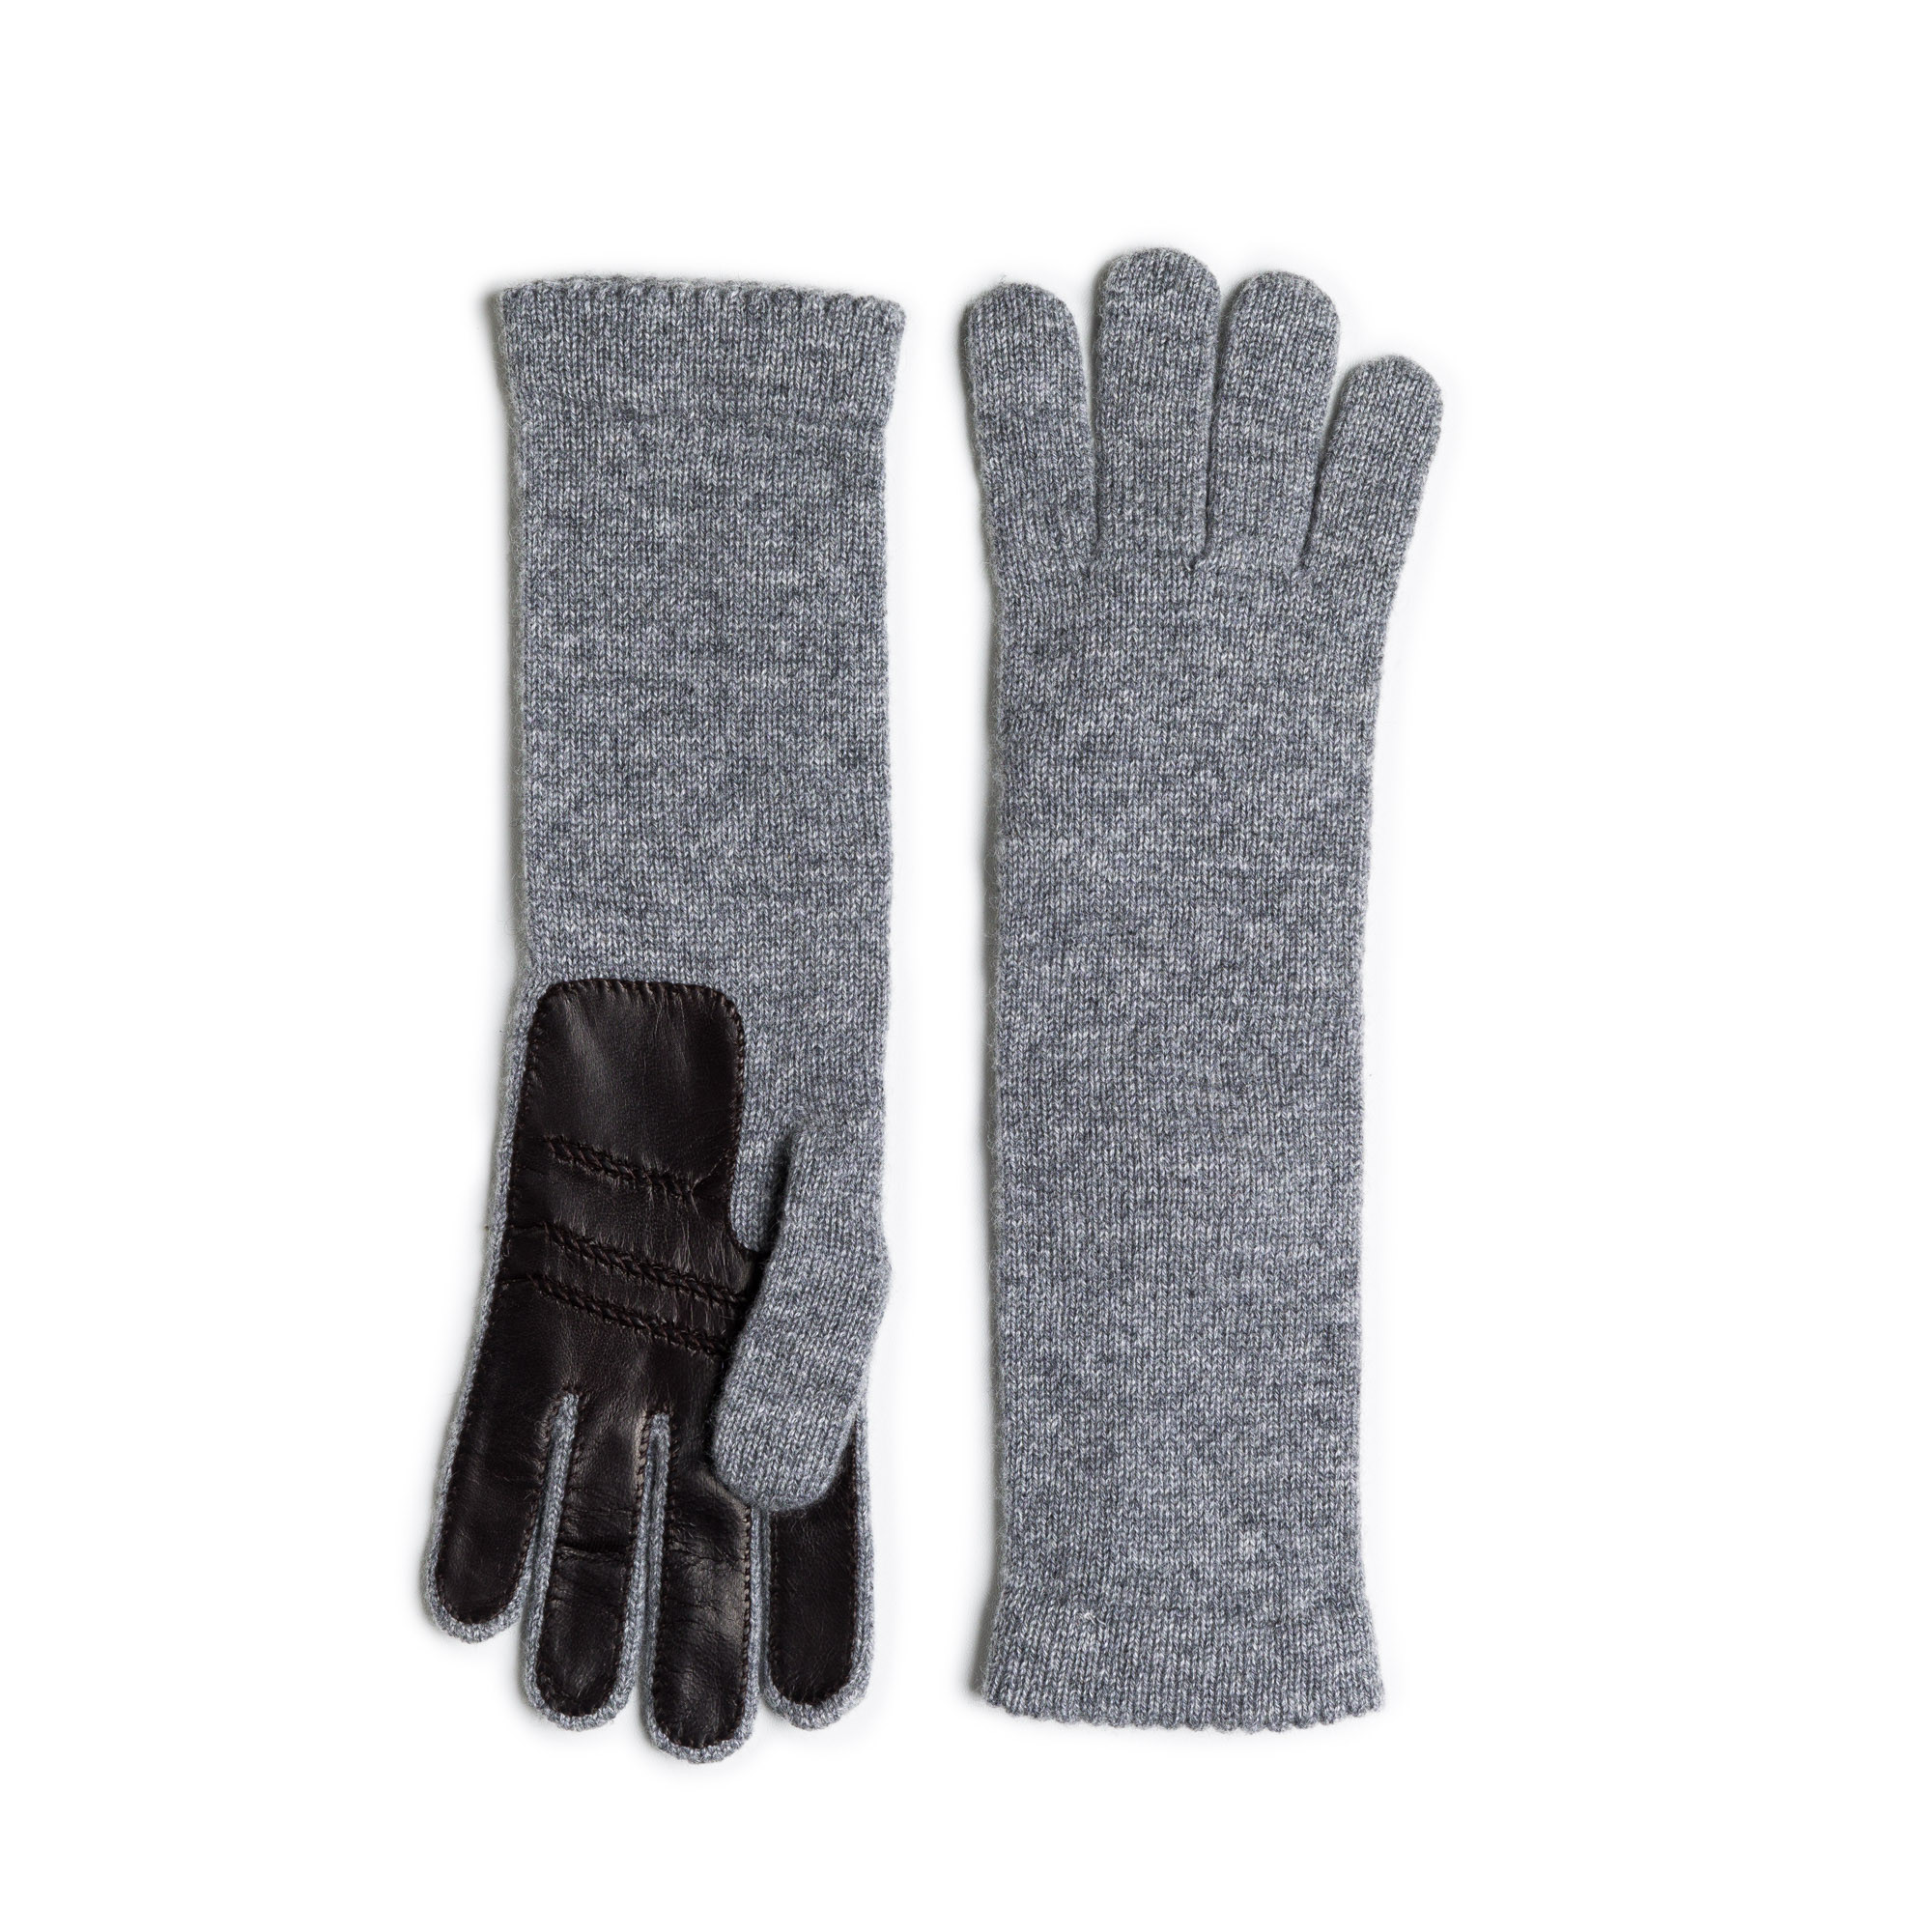 Inverni - Ladies Cashmere and Leather Gloves - Graphite